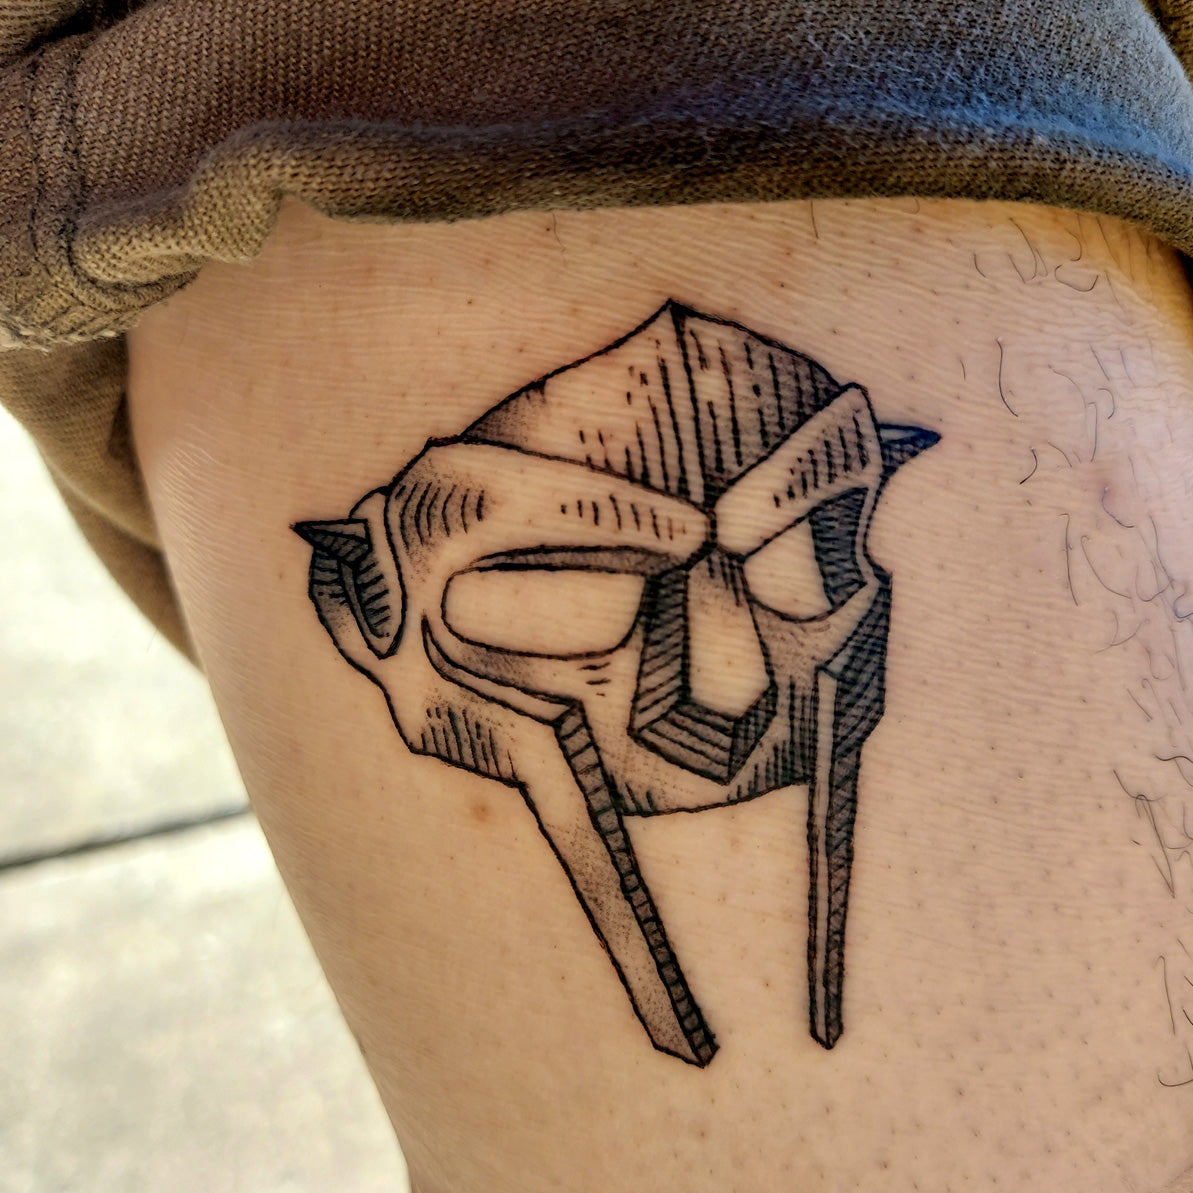 helmet tattoo on thigh by Vincent Li